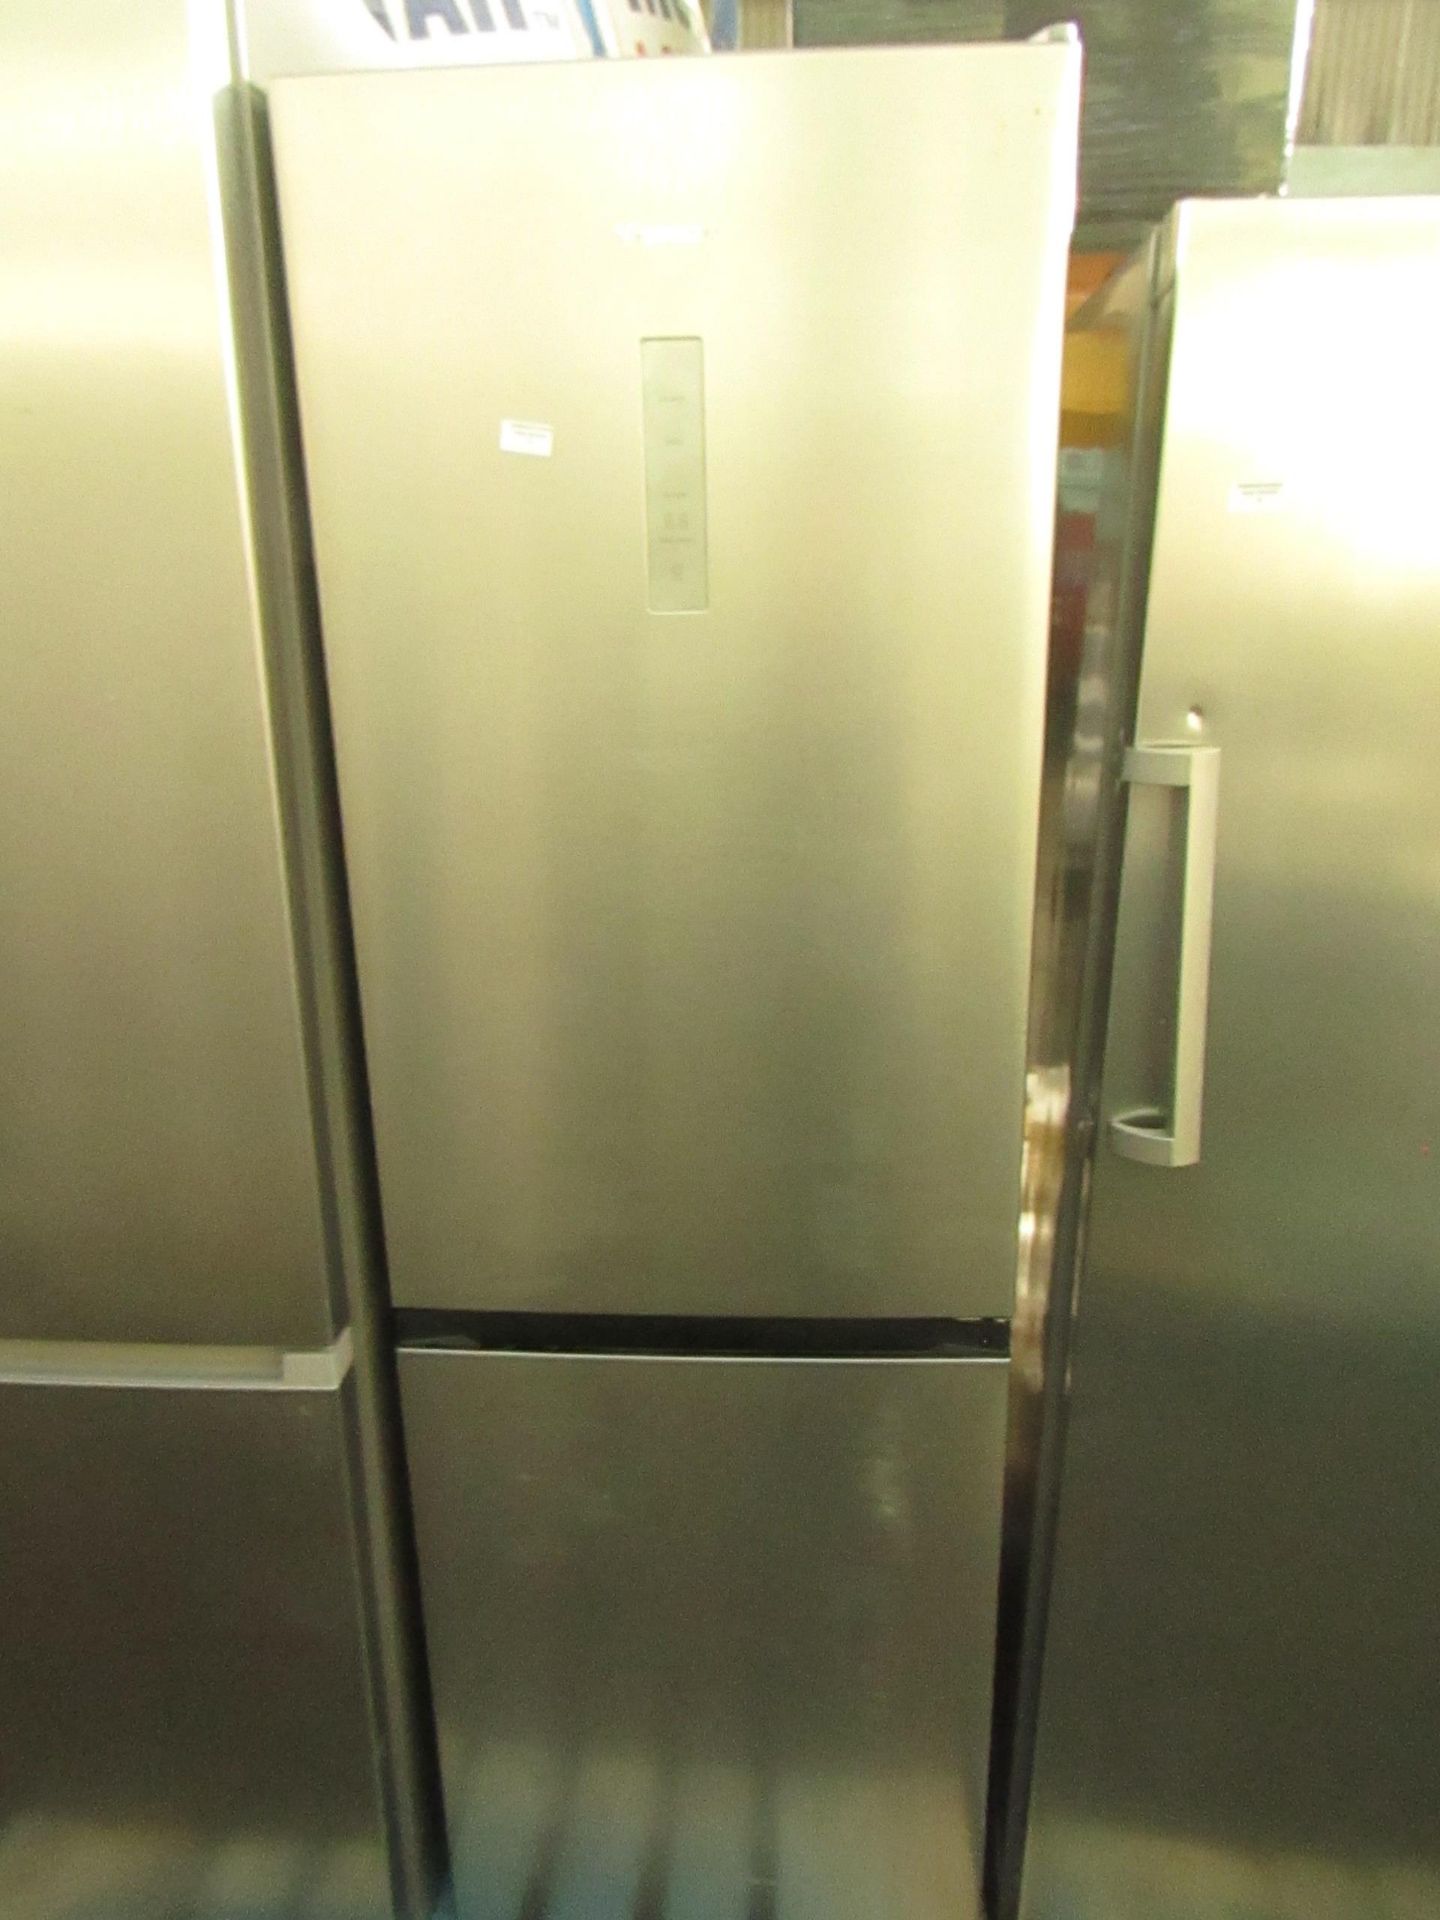 Hisense 60/40 fridge freezer, has marks on the front but clean inside